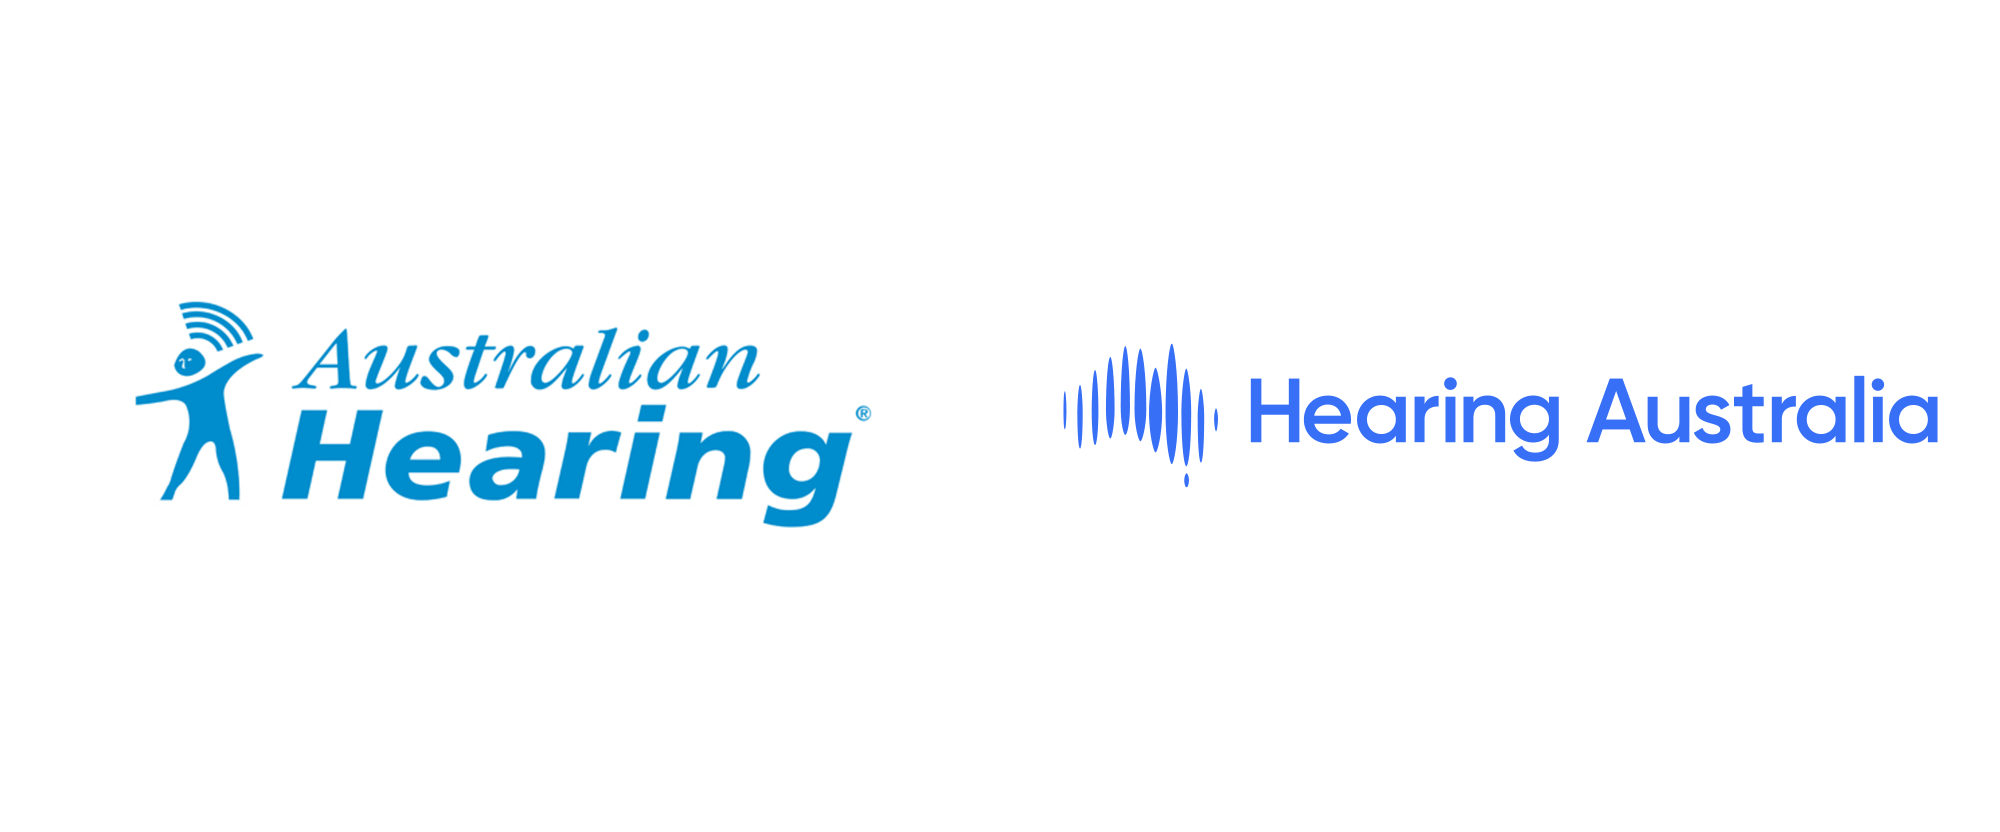 New Logo and Identity for Hearing Australia by Landor